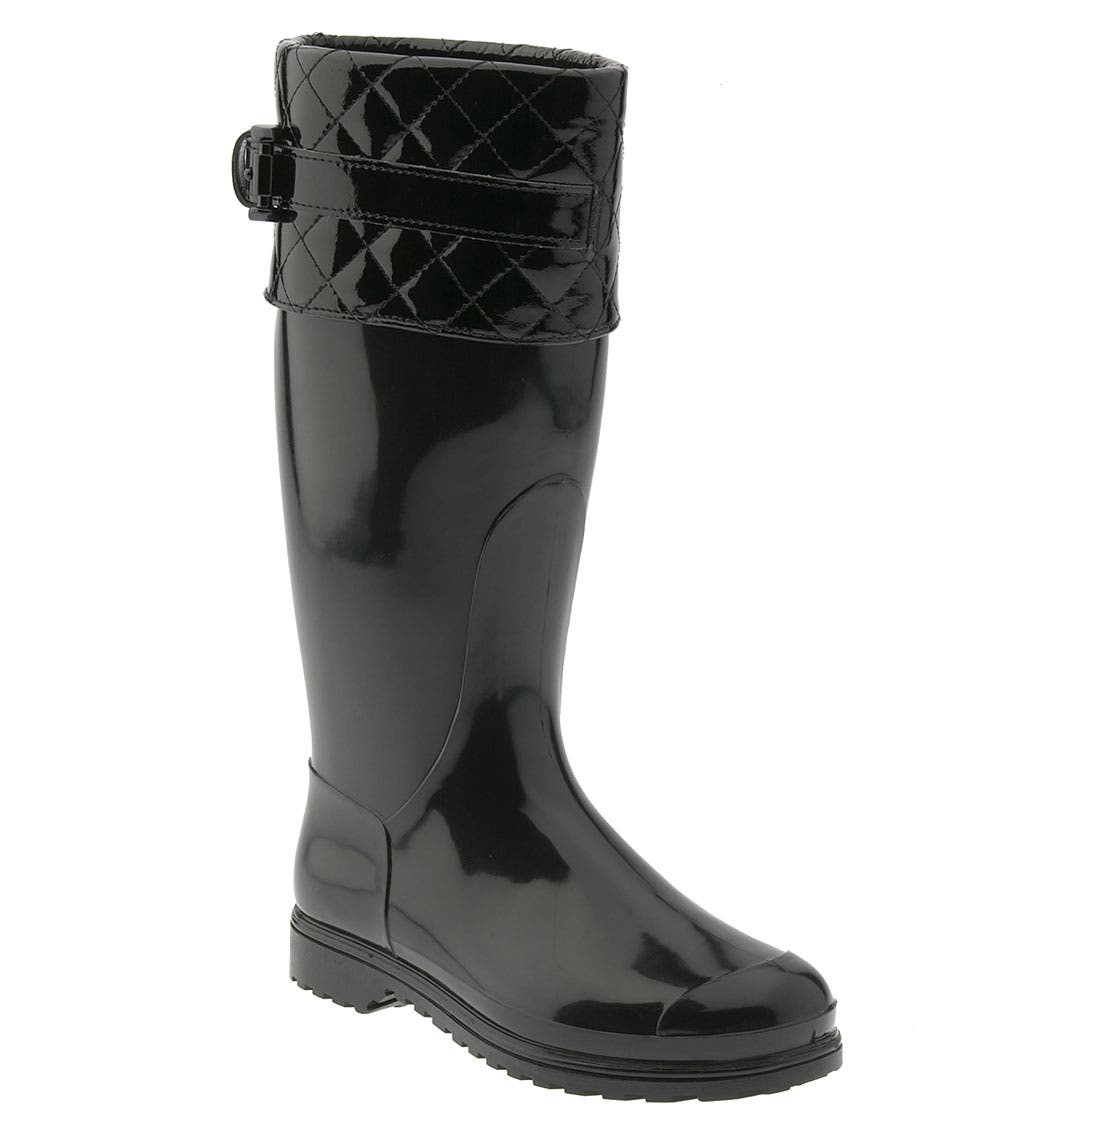 burberry rain boots nordstrom